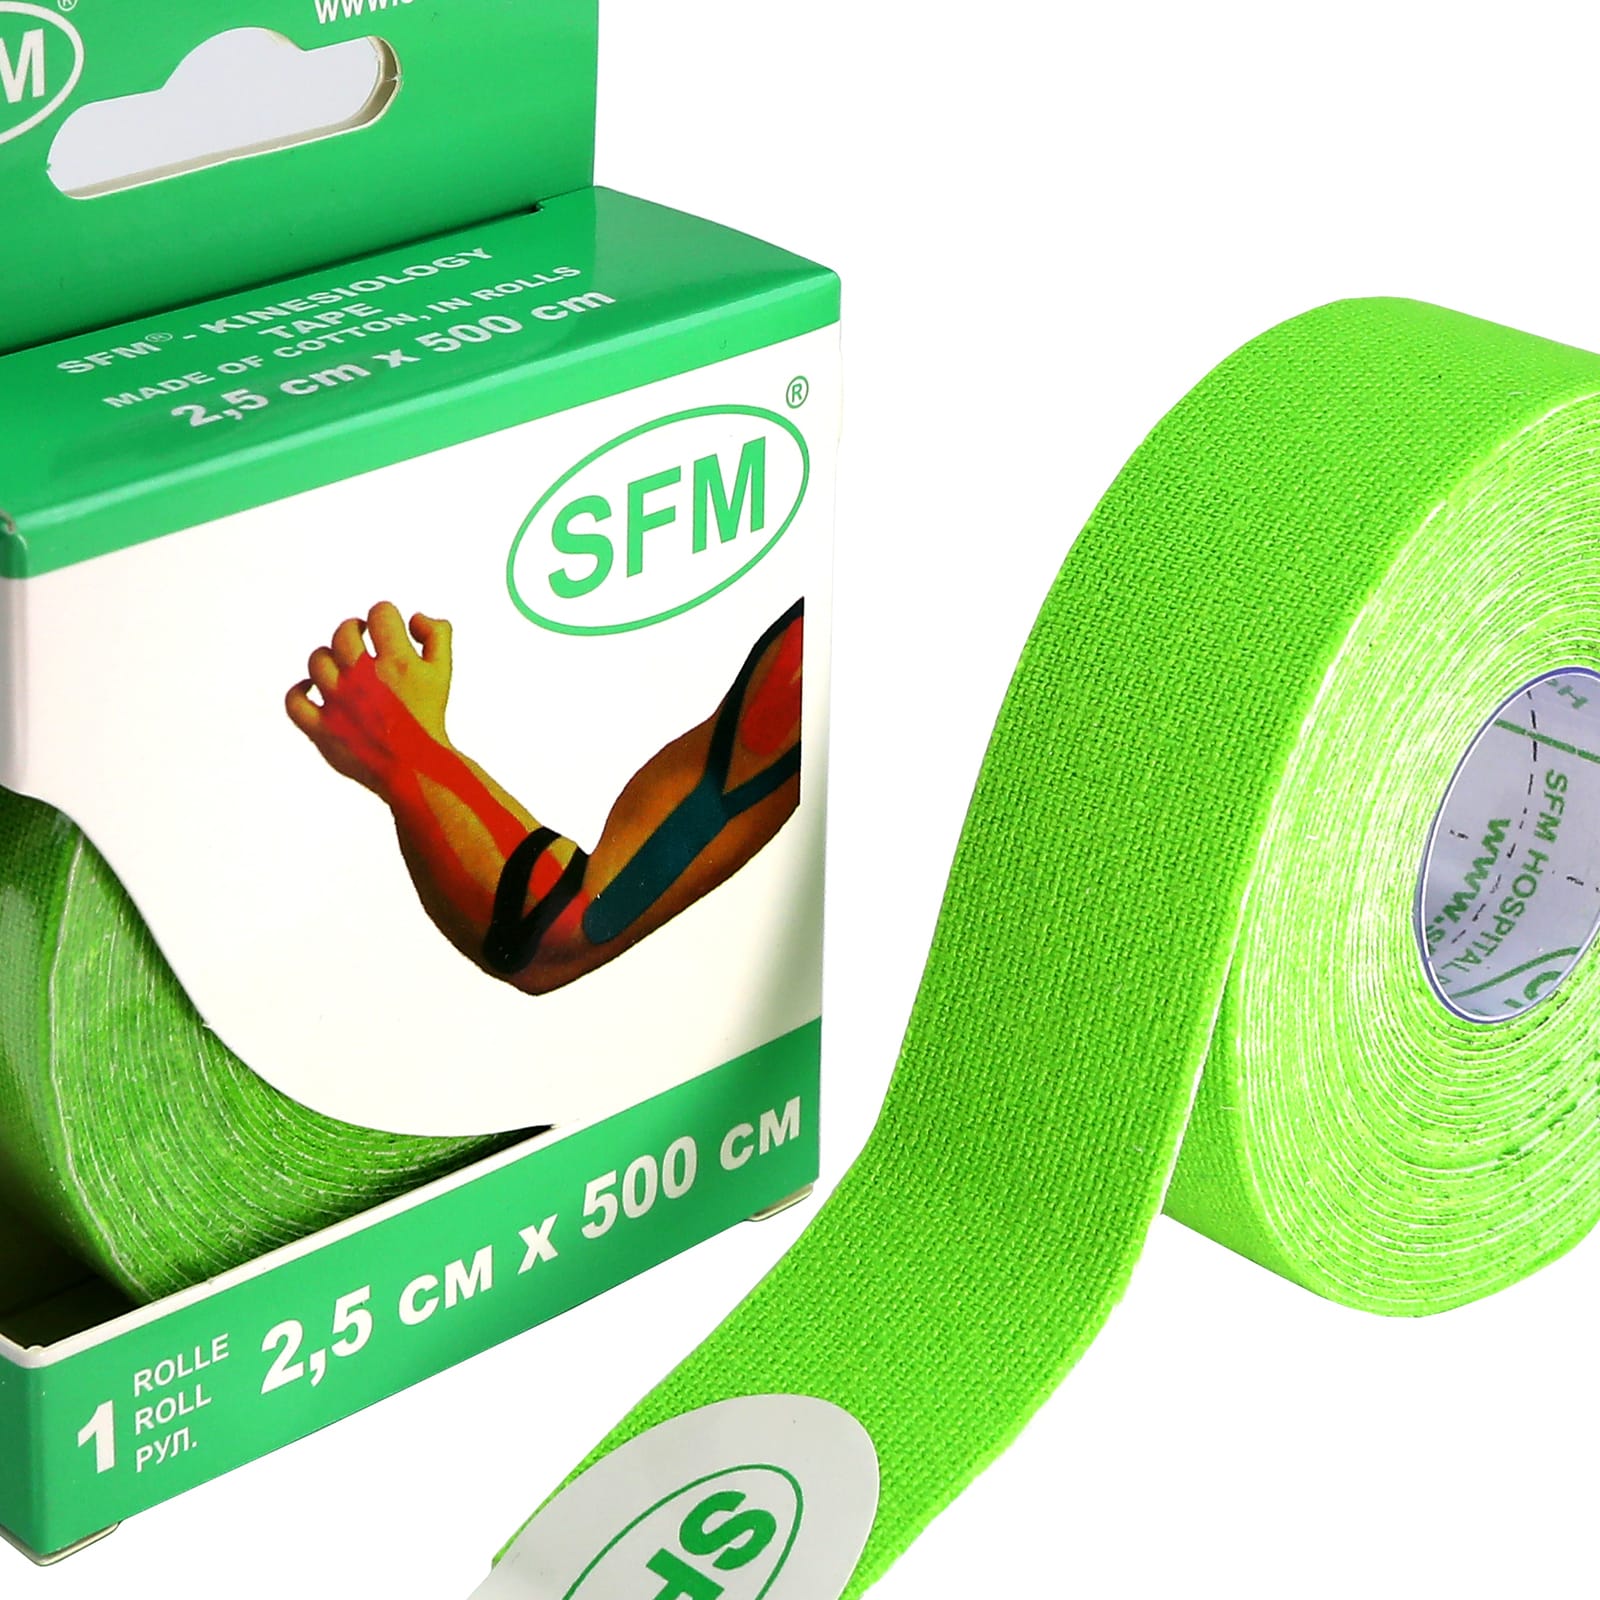 Кинезиотейп SFM Hospital Products Plaster на хлопковой основе 2.5х500 см зеленого цвета в диспенсере - фото 2